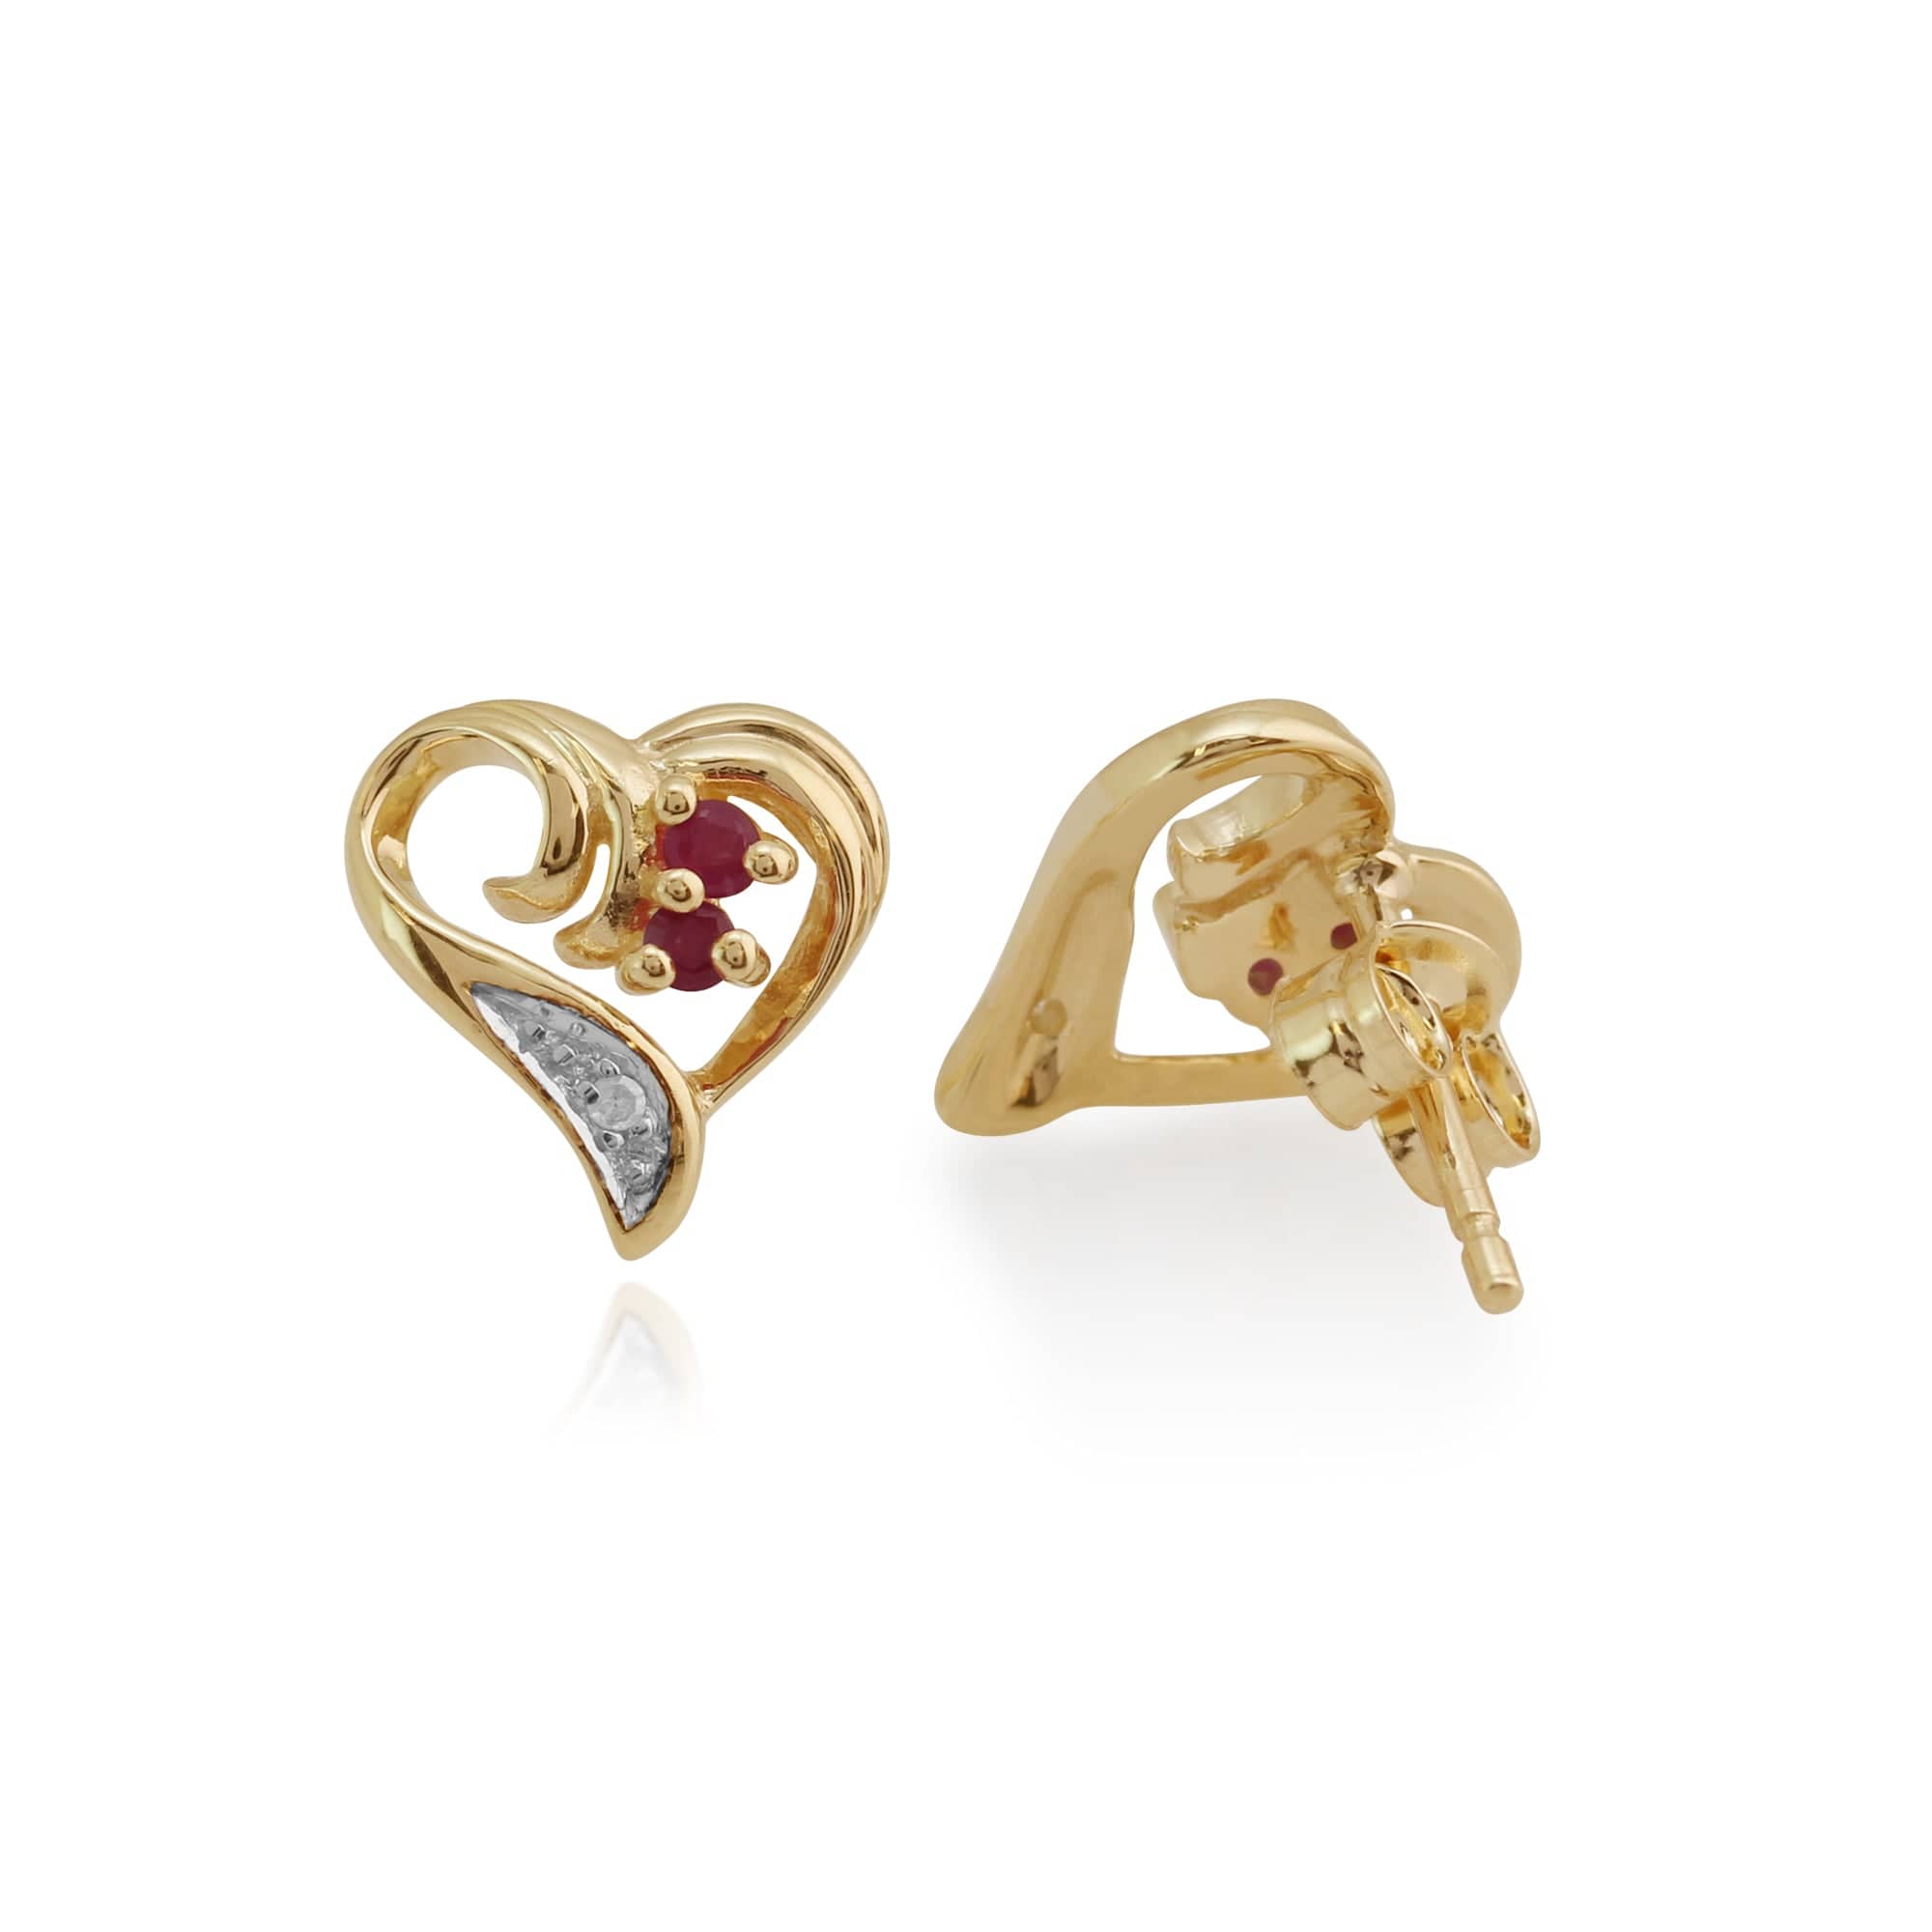 181E0766019 Classic Ruby & Diamond Swirled Love Heart Stud Earrings in 9ct Gold 2